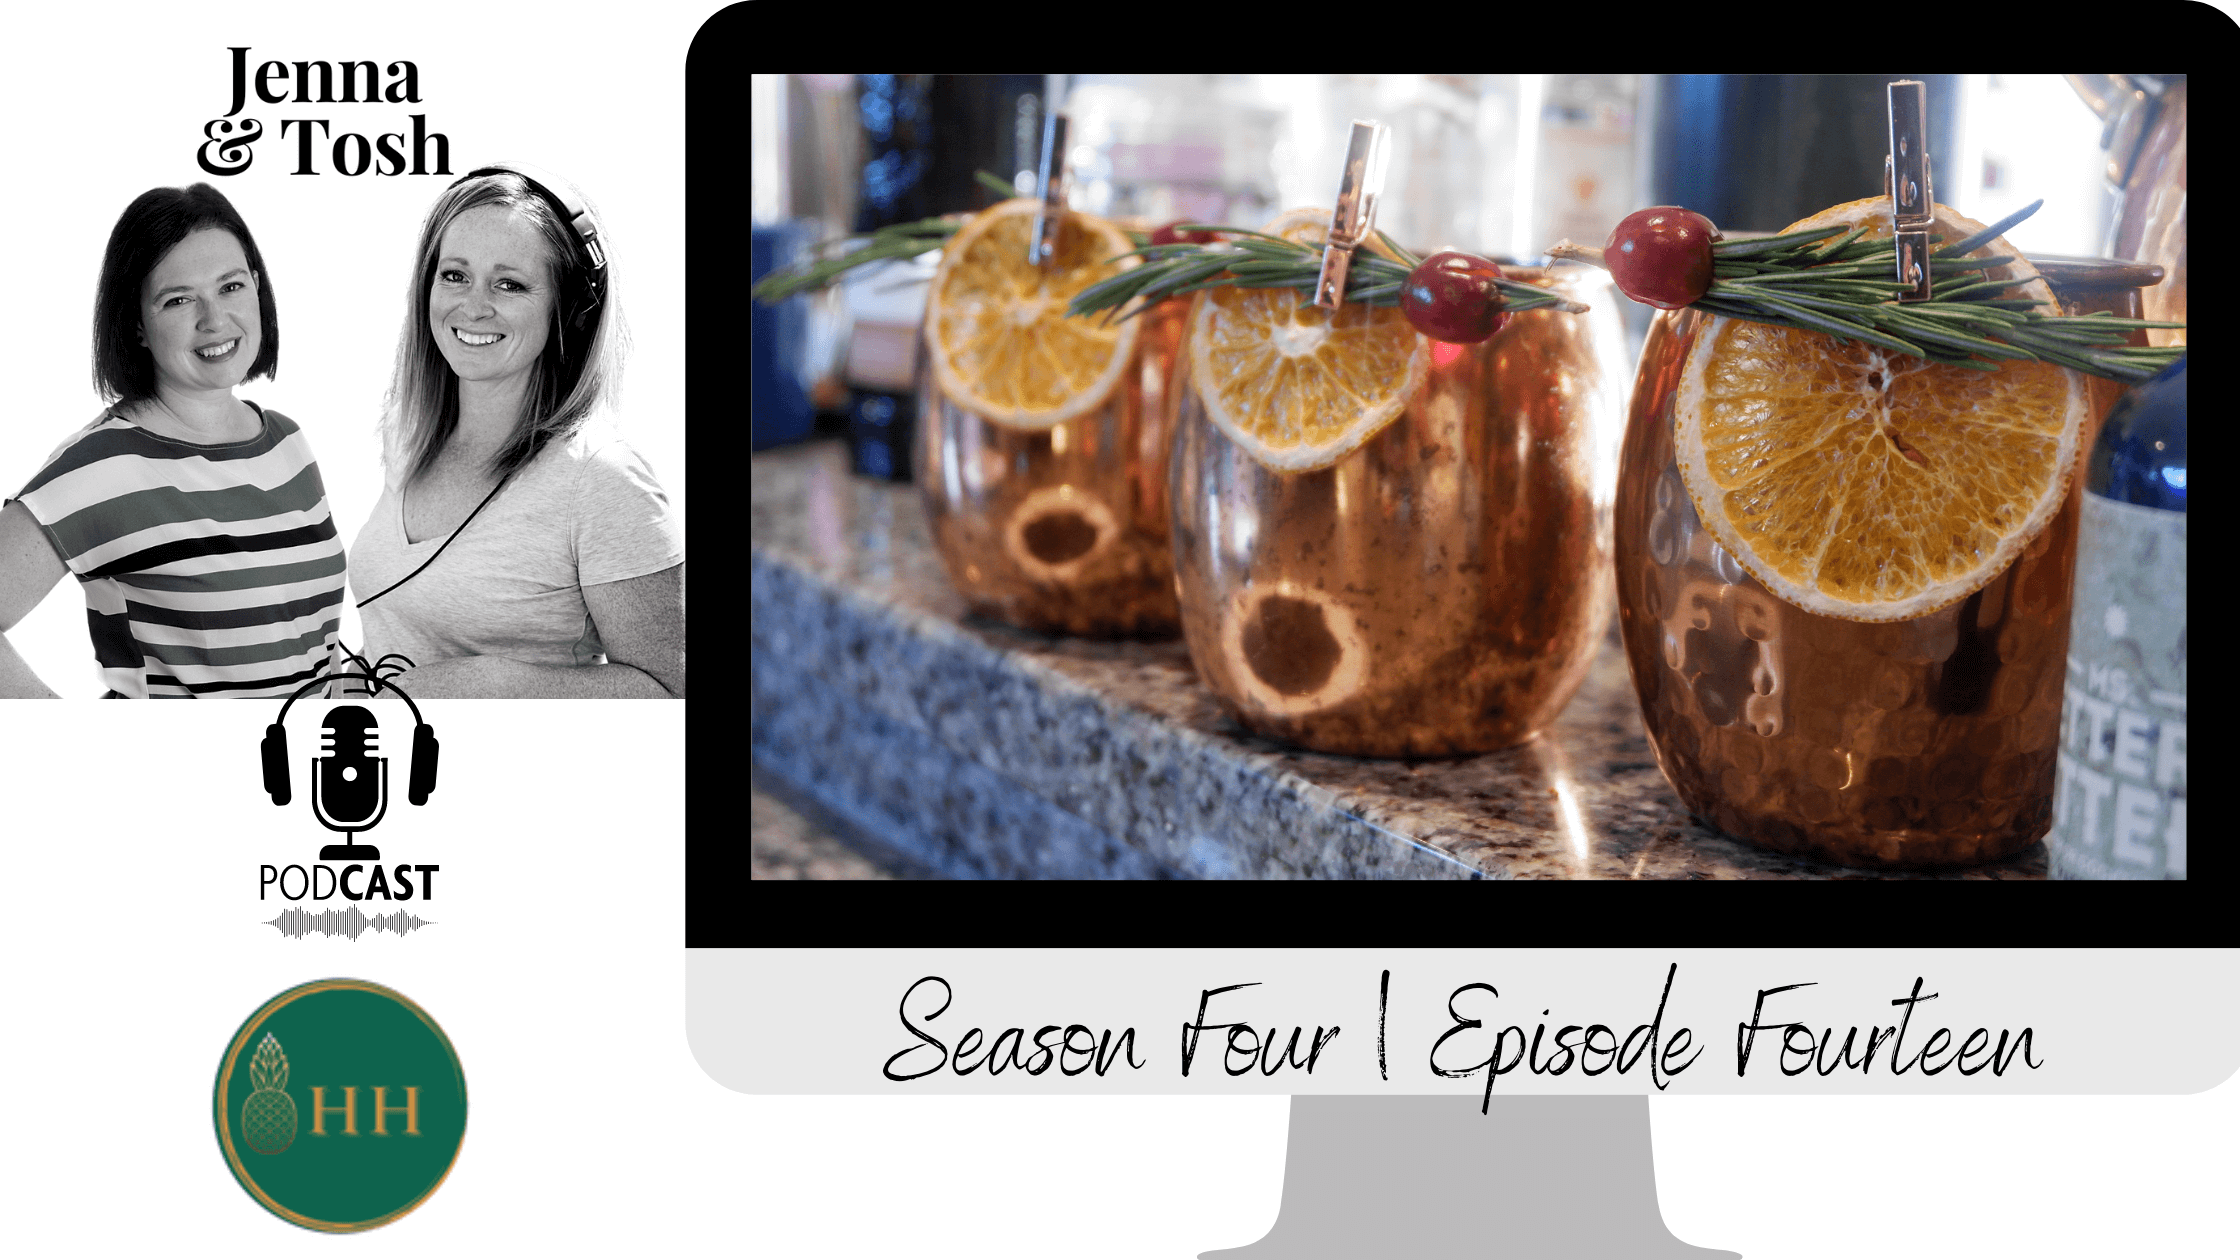 jenna tosh pickle planet podcast moncton new brunswick cocktail recipe ideas christmas james hughes hospitality